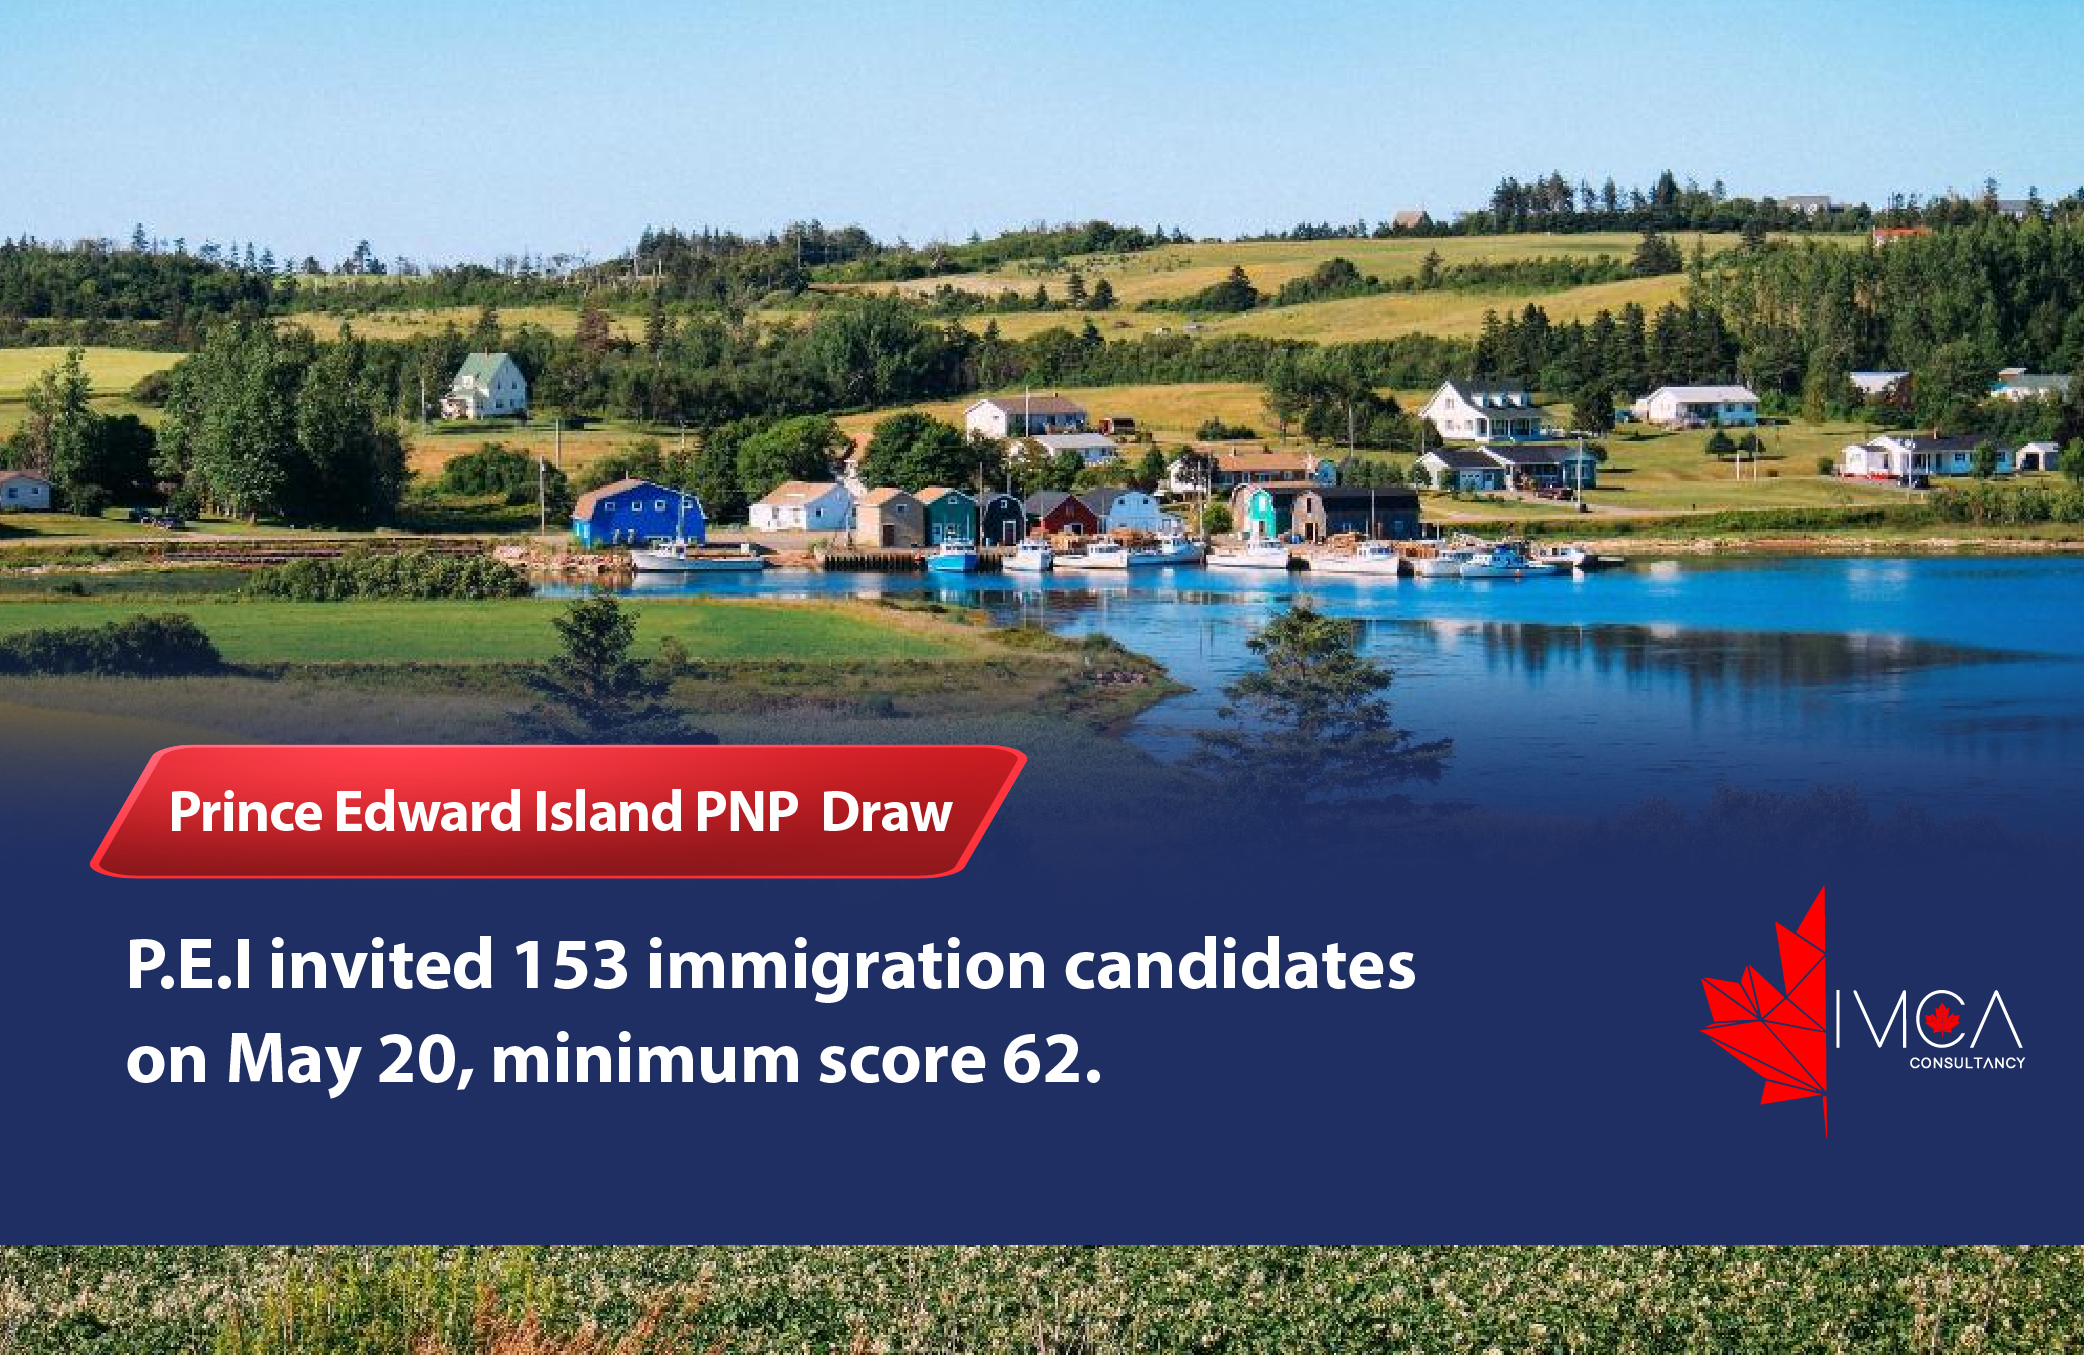 Prince Edward Island PNP Draw IMCA Consultancy